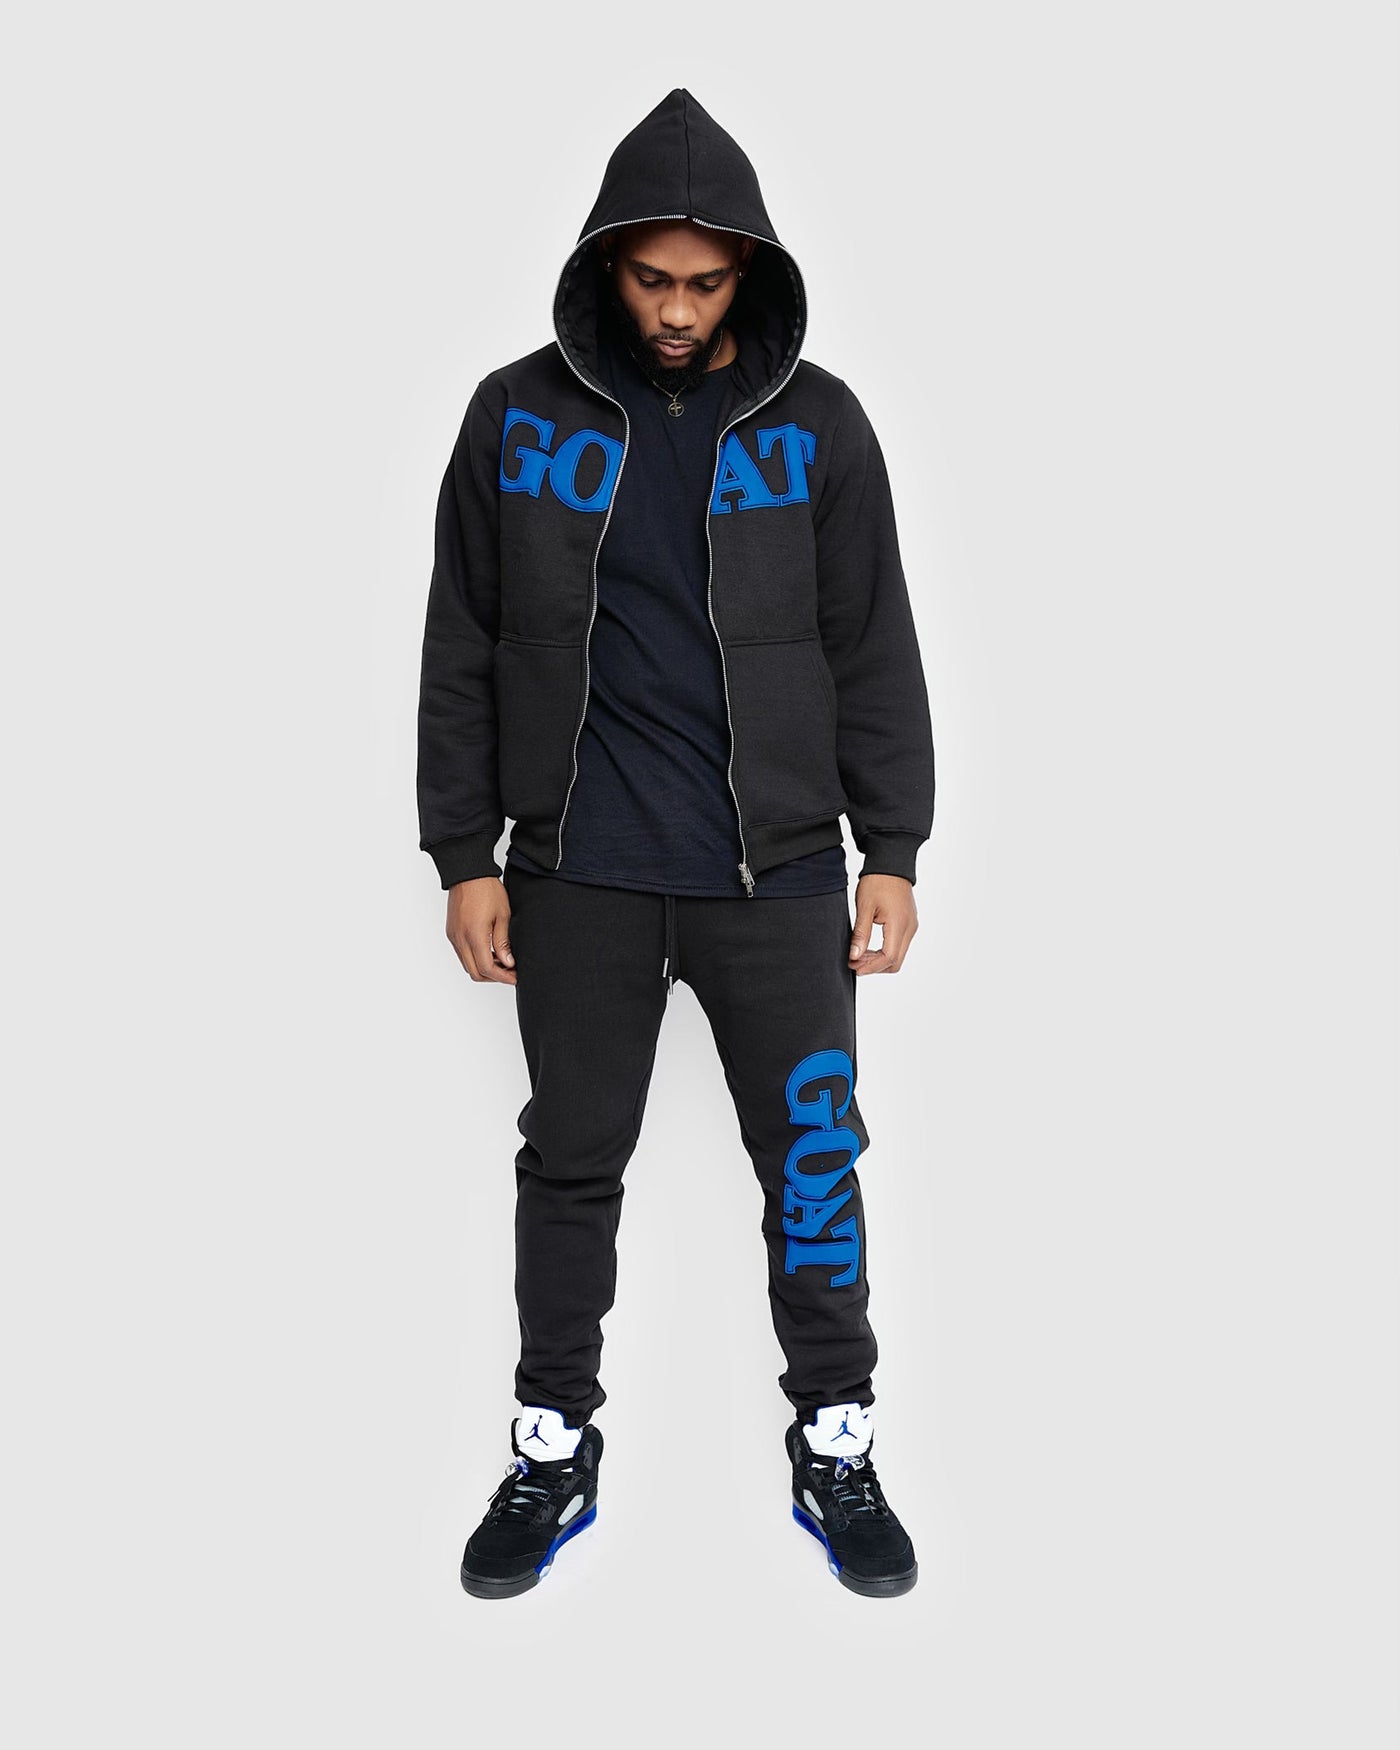 GOAT Full Zip Sweatsuit (Black/Racer Blue)